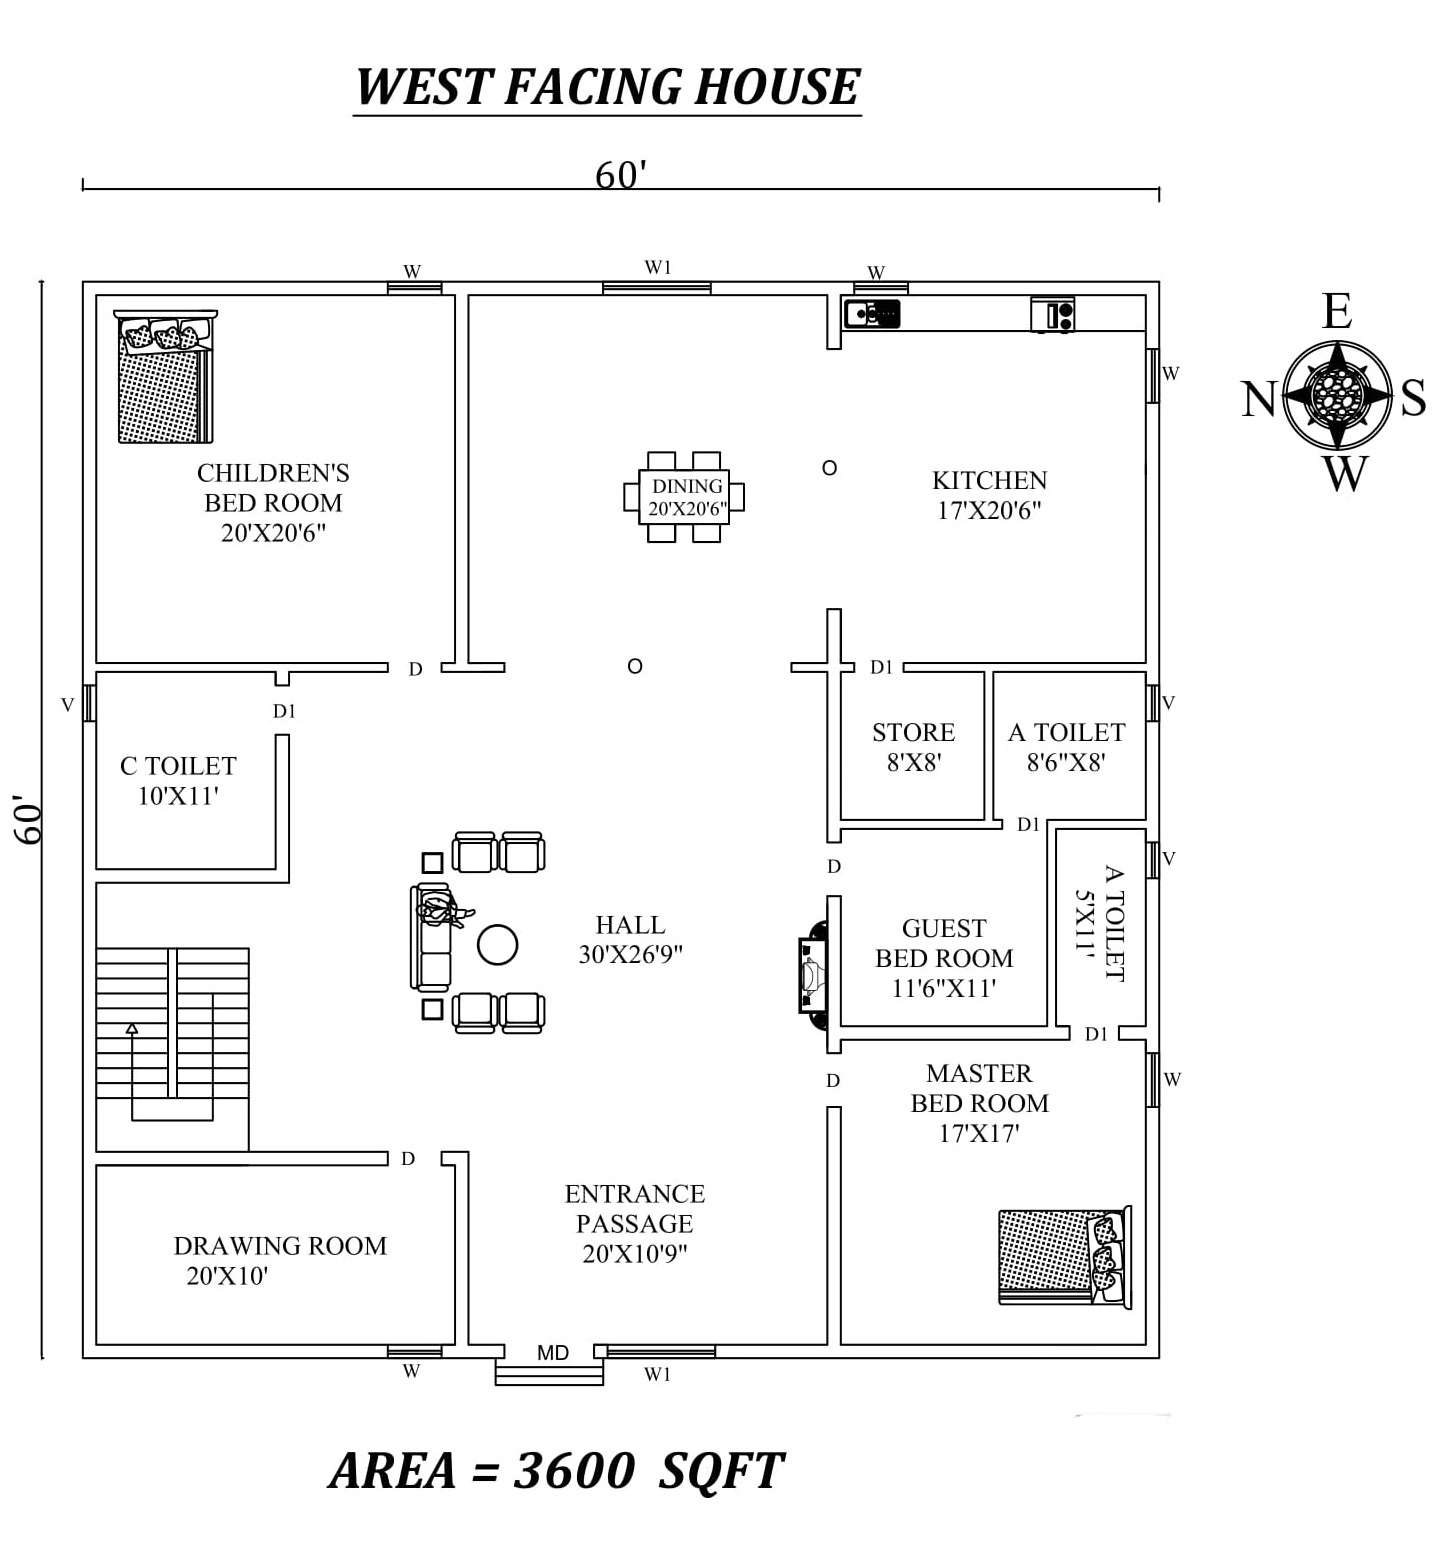 60'X 60' spacious 3bhk West facing House Plan As Per Vastu Shastra